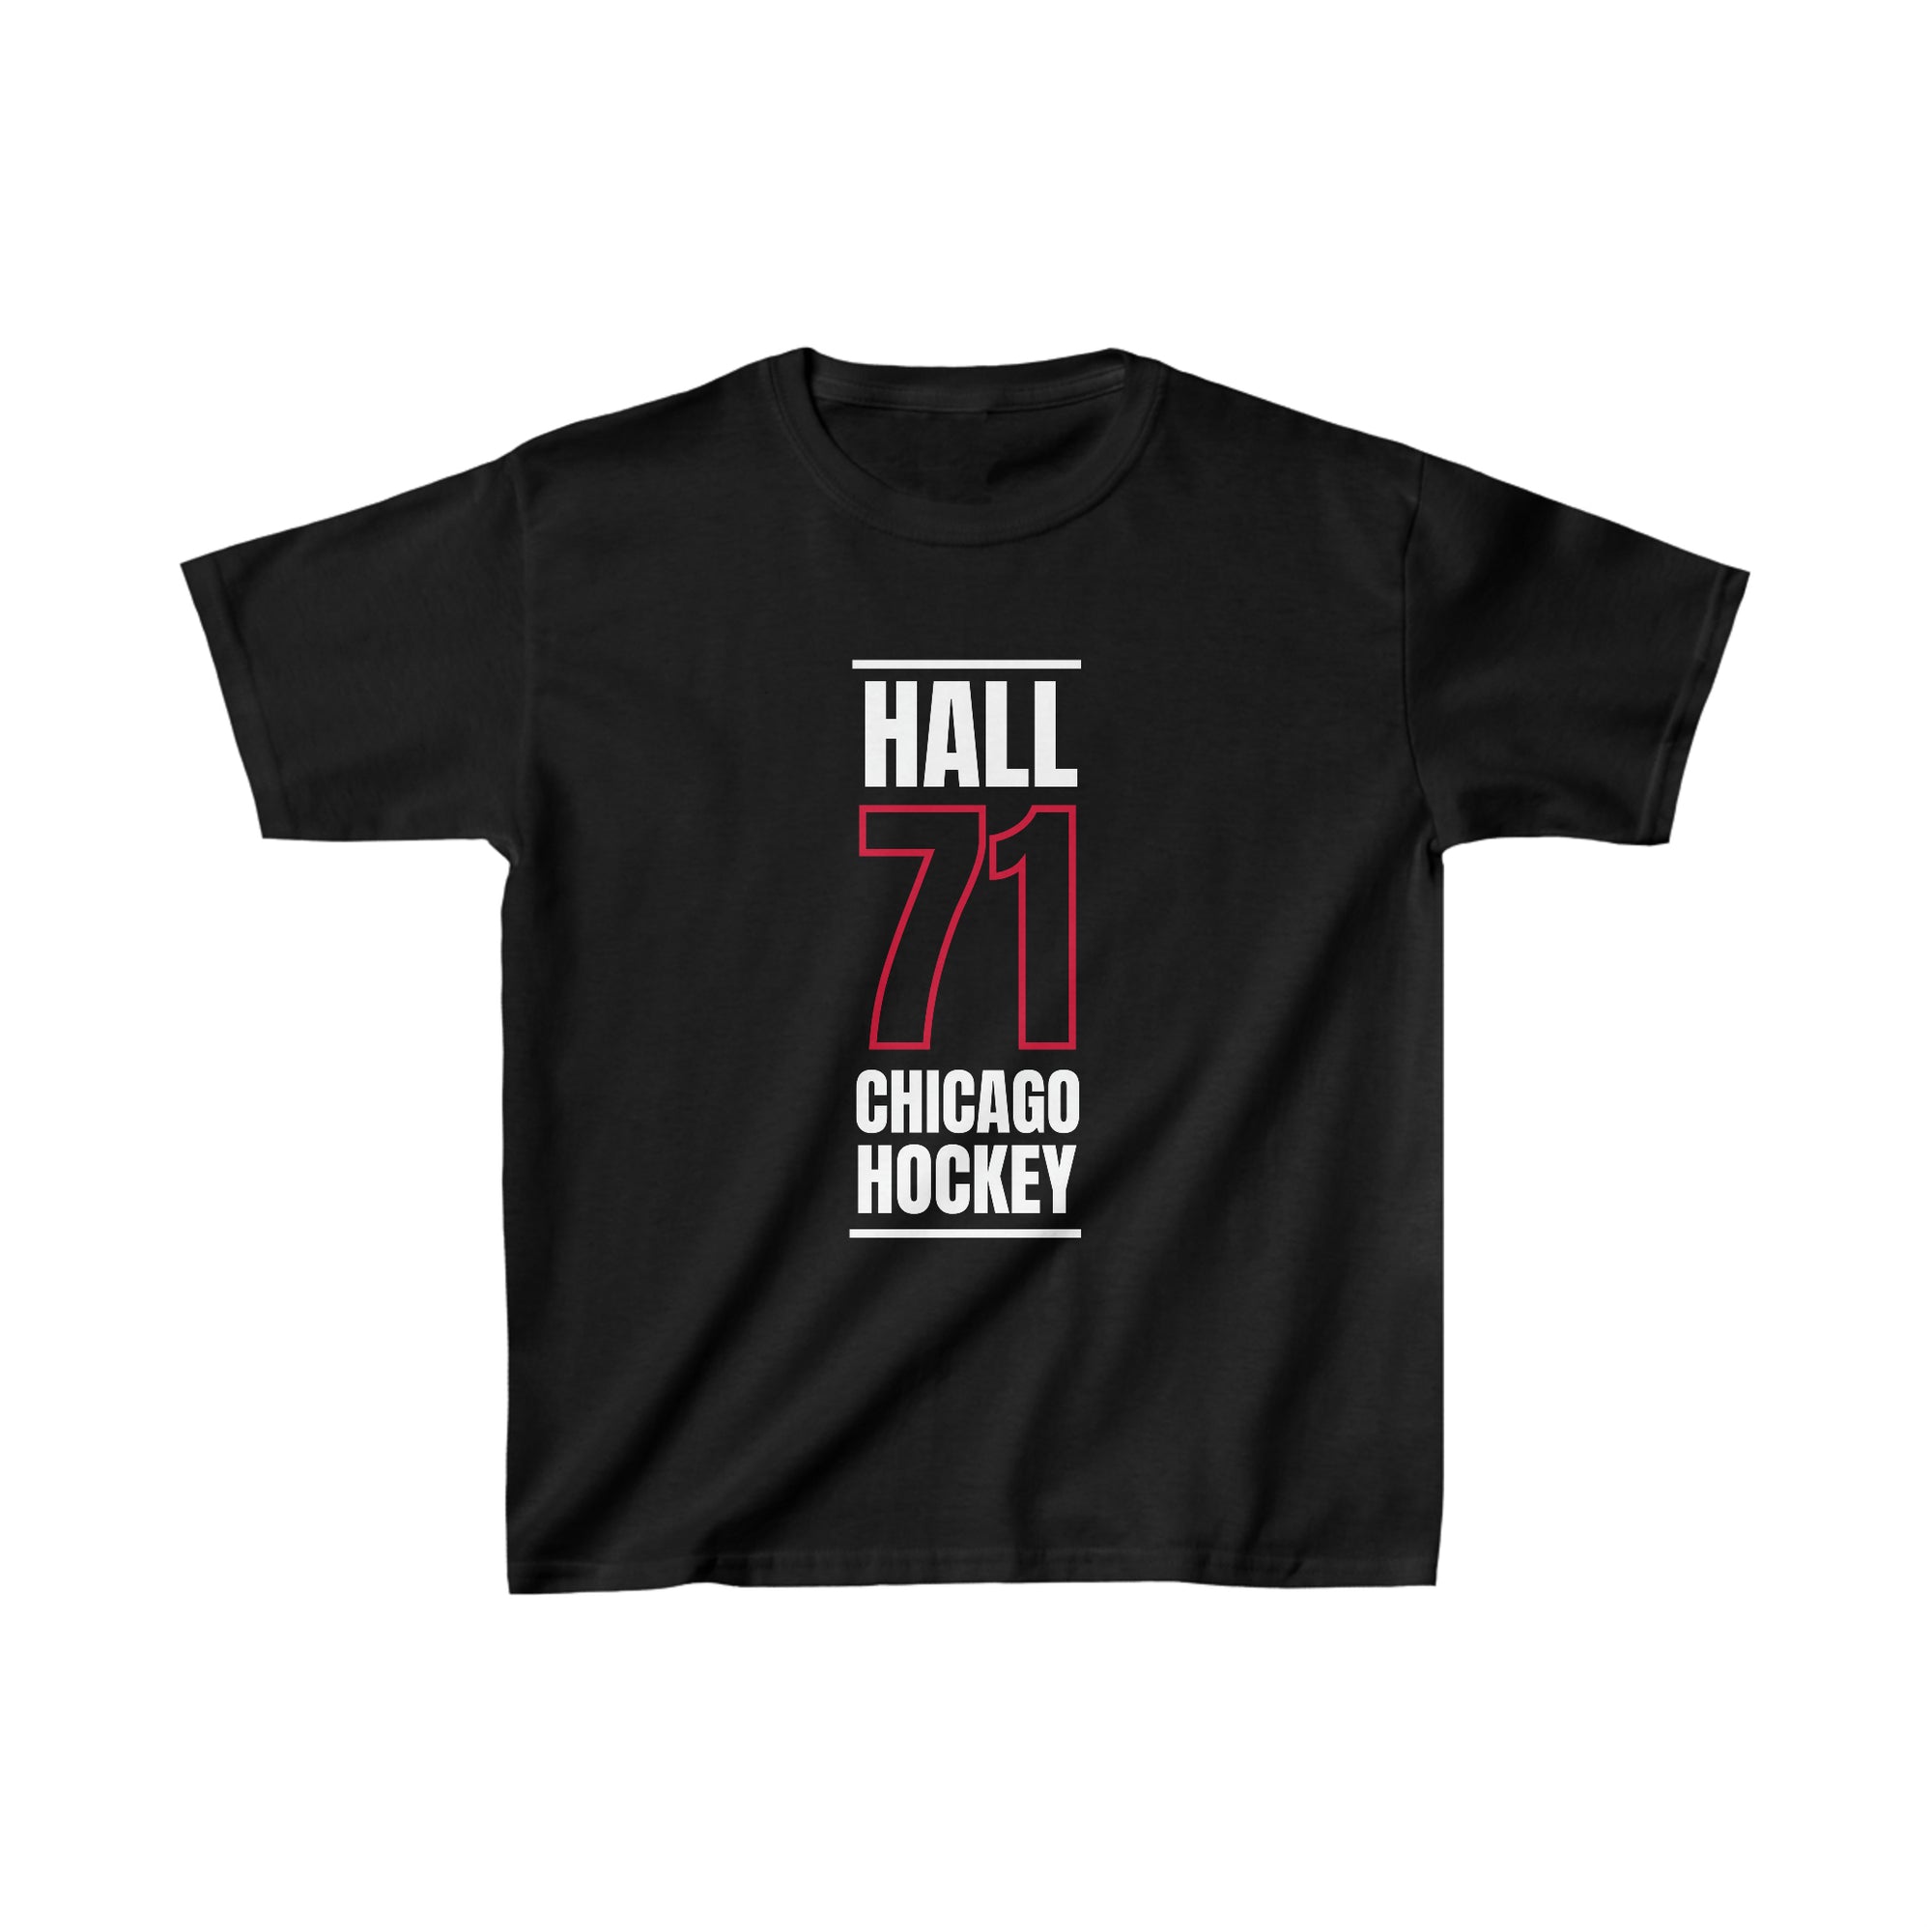 Hall 71 Chicago Hockey Black Vertical Design Kids Tee